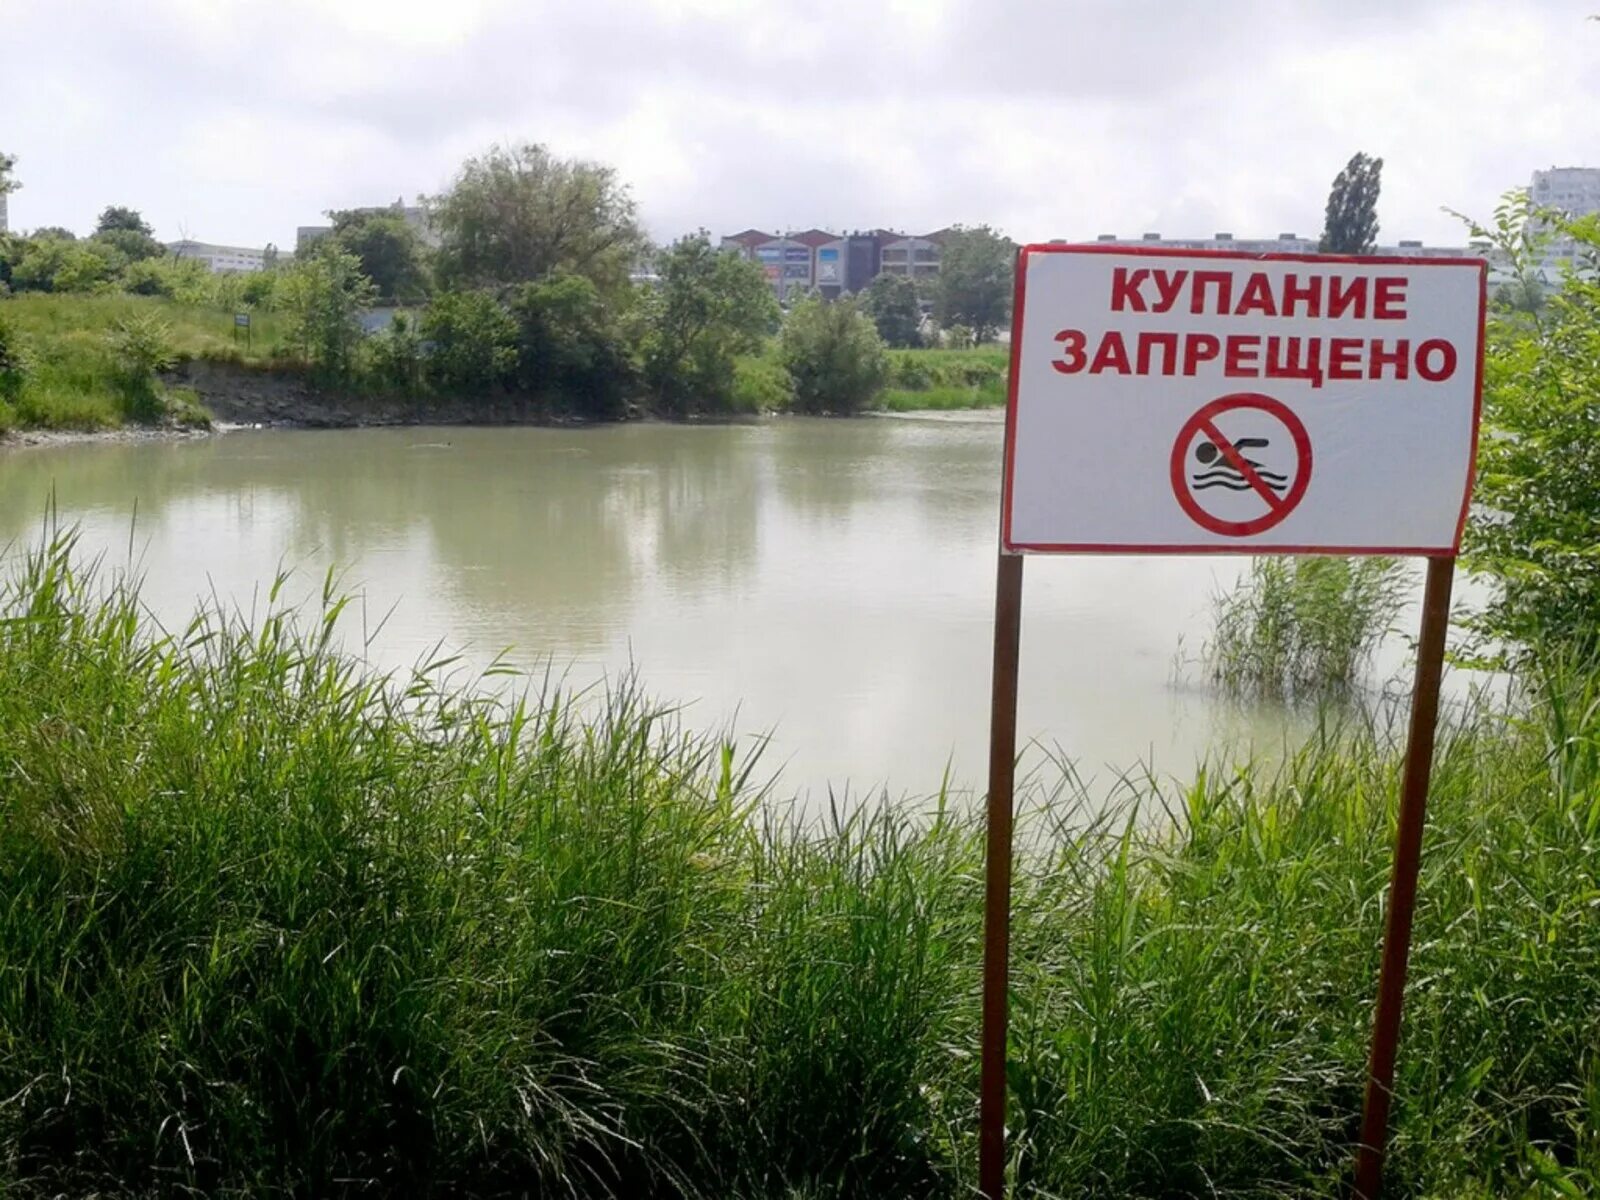 Купание запрещено табличка. Купаться запрещено. Аншлаг купание запрещено. Знак «купаться запрещено».